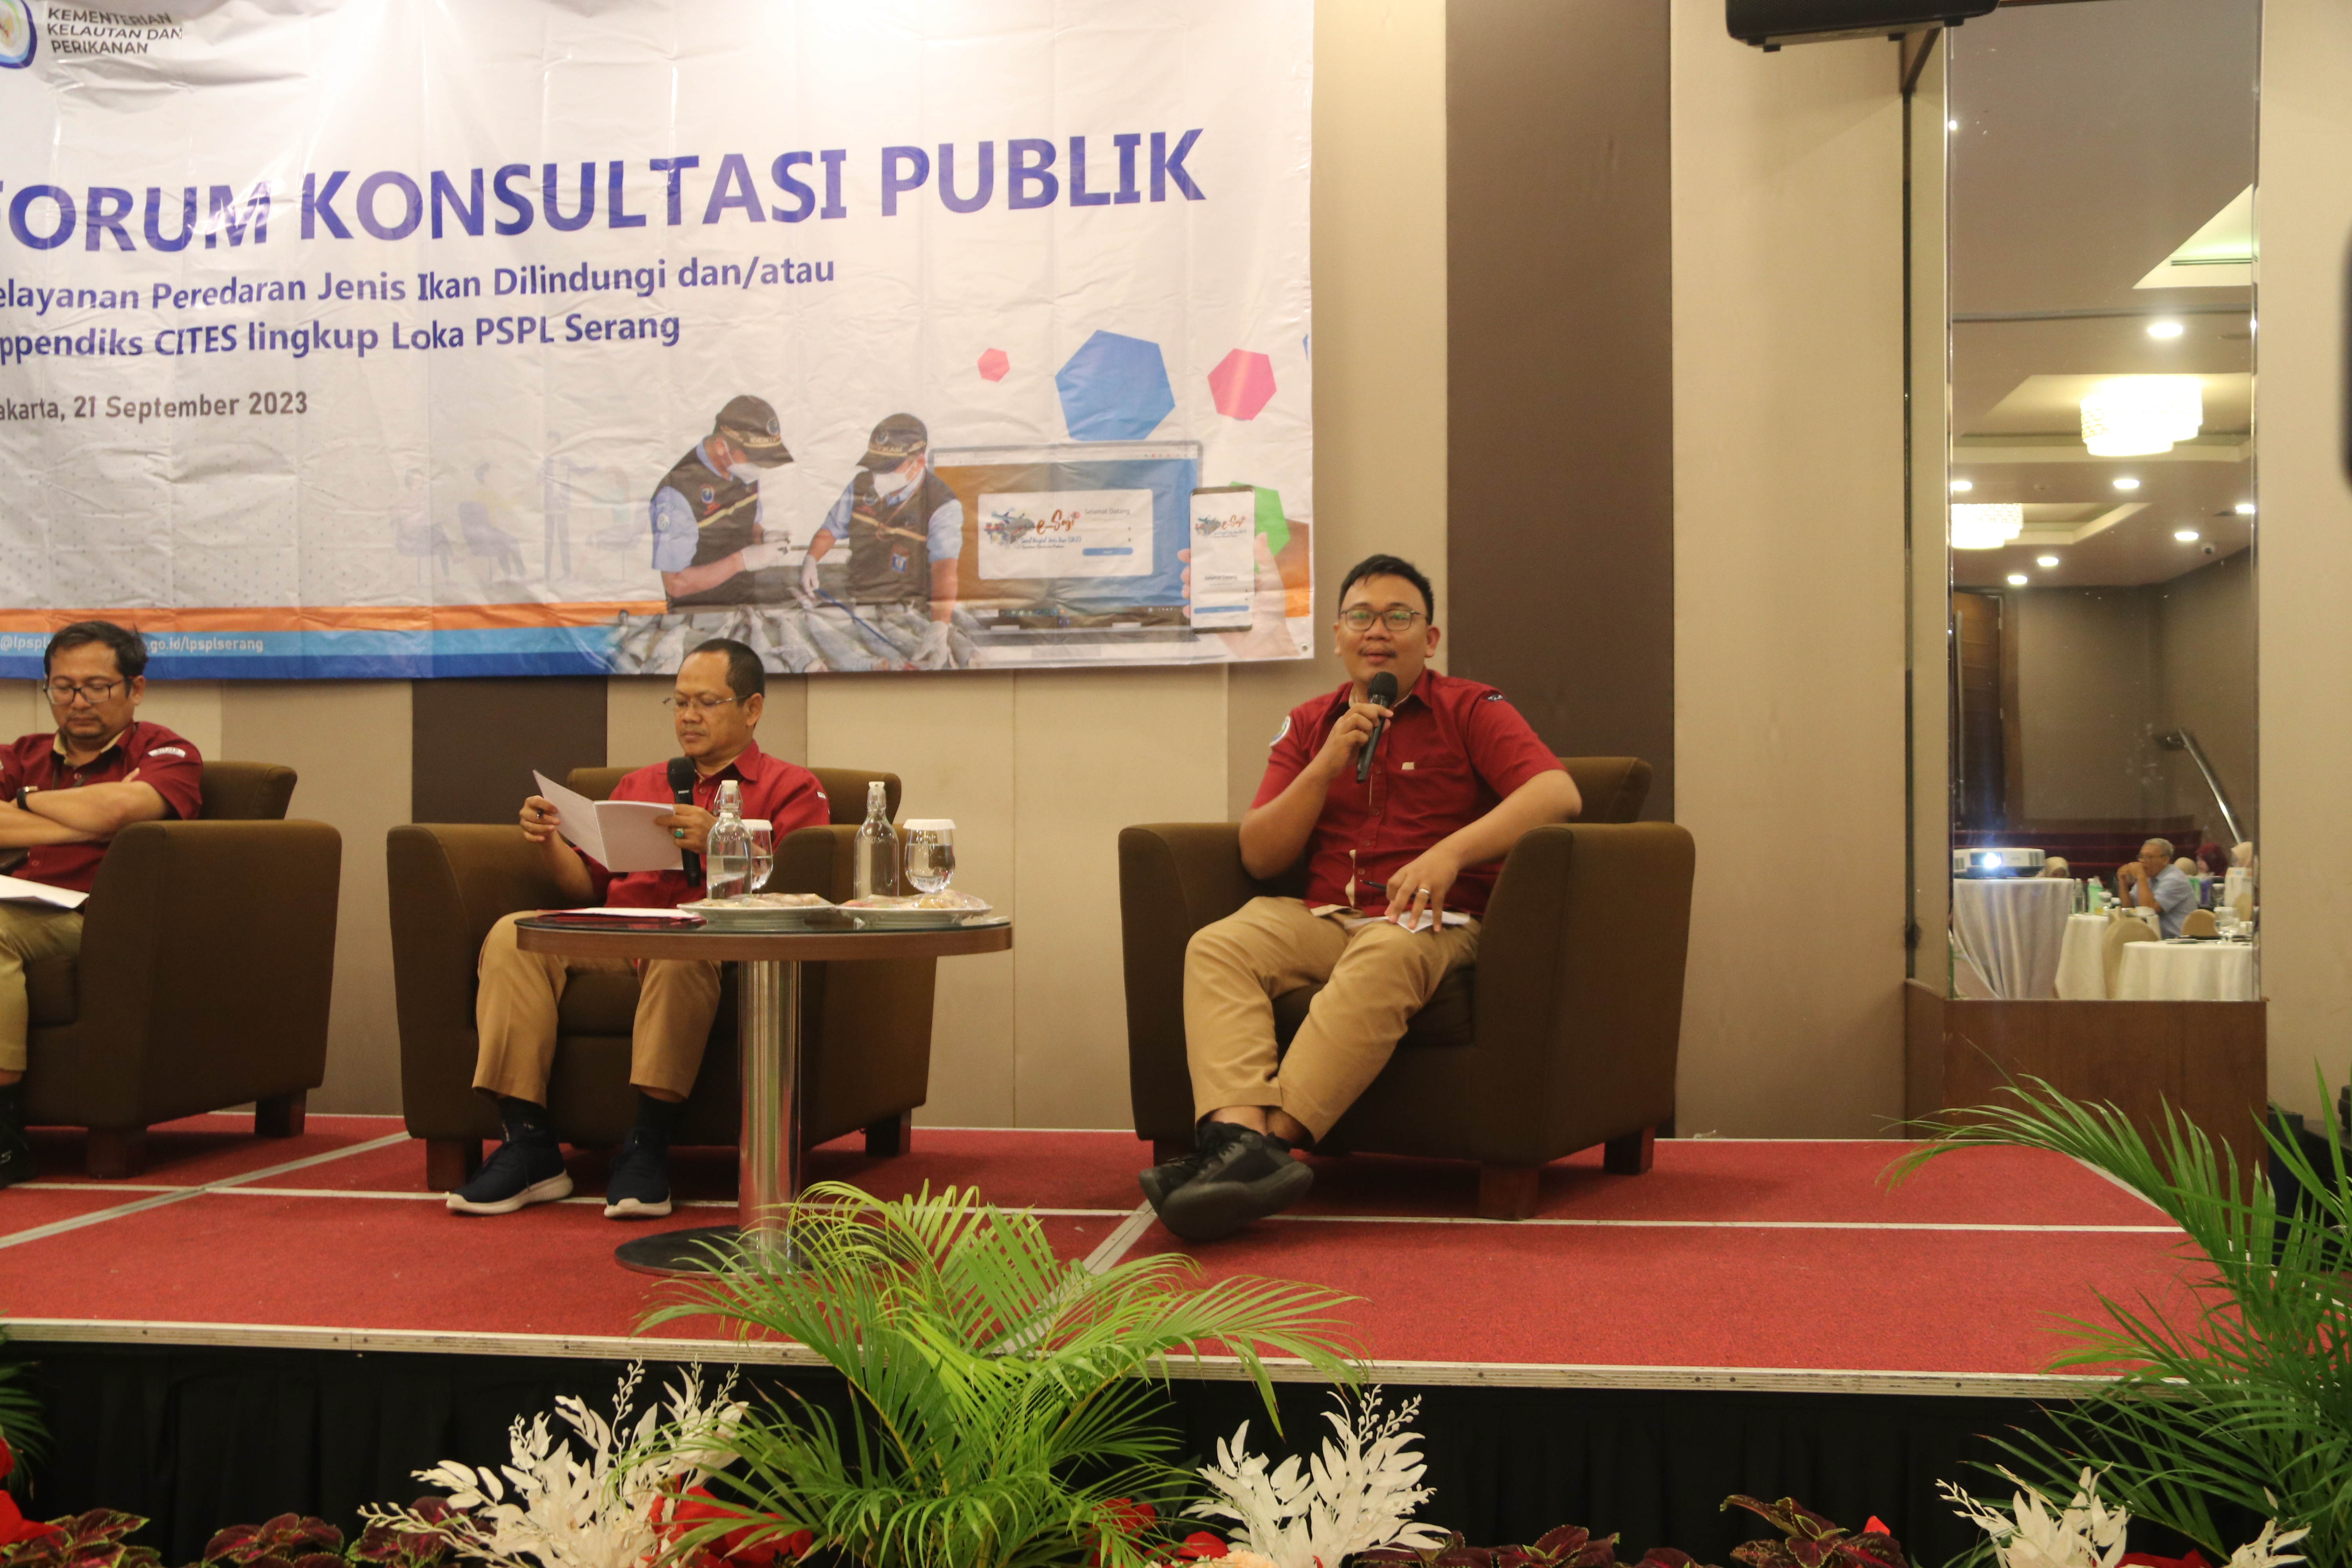 Forum Konsultasi Publik Pelayanan Peredaran Jenis Ikan Dilindungi dan/atau Appendik Cites Lingkup Loka PSPL Serang, Jakarta (21/9).